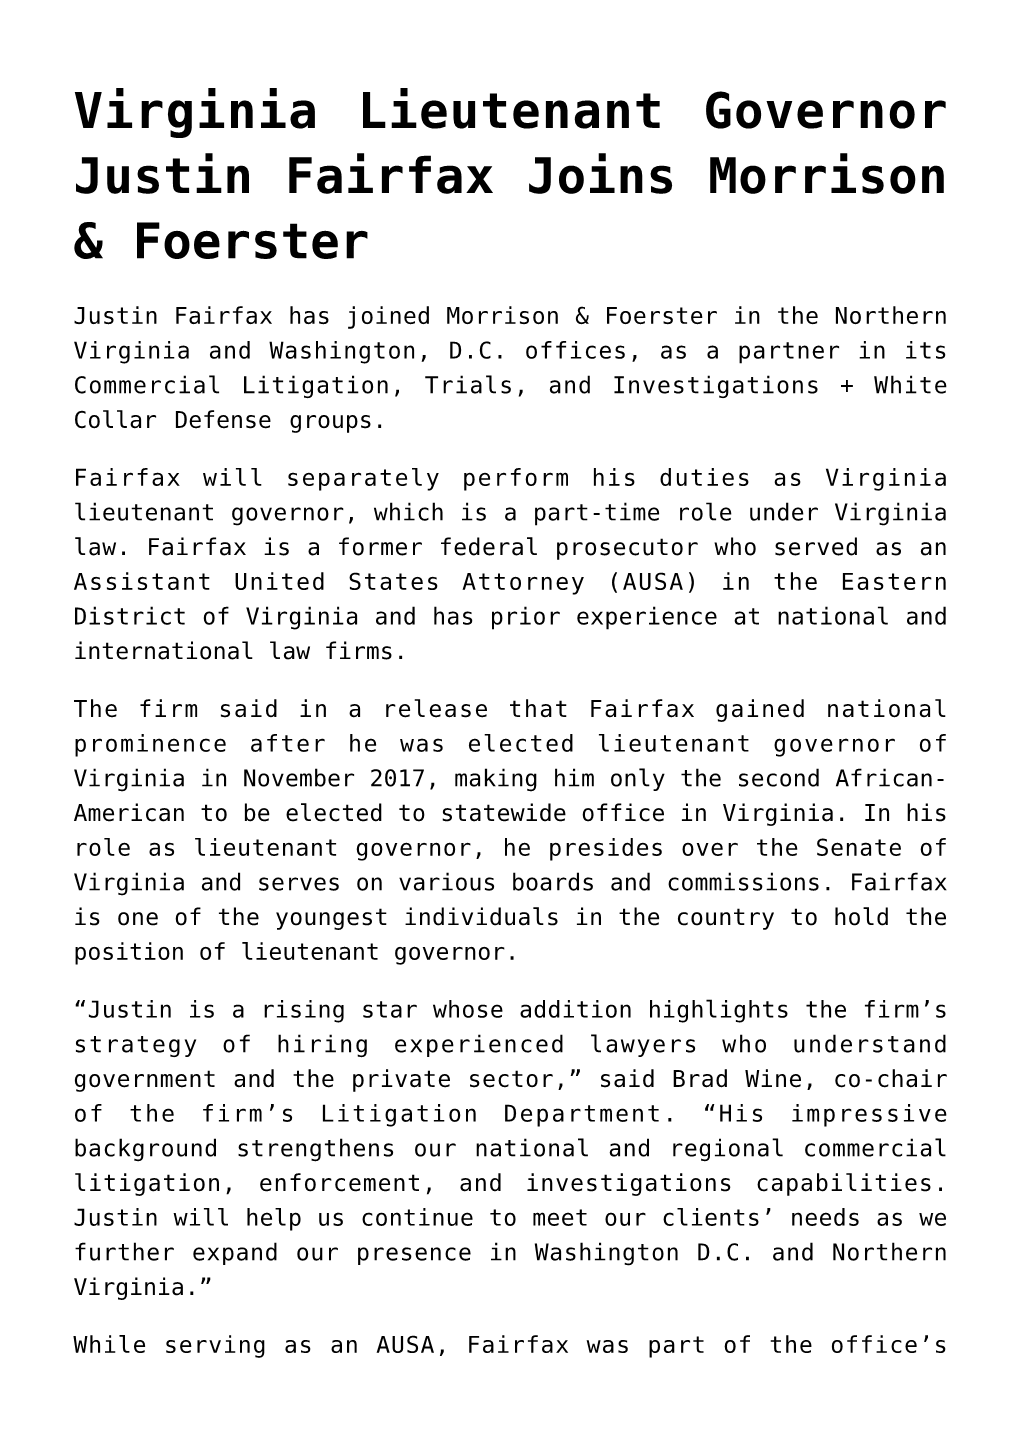 Virginia Lieutenant Governor Justin Fairfax Joins Morrison & Foerster